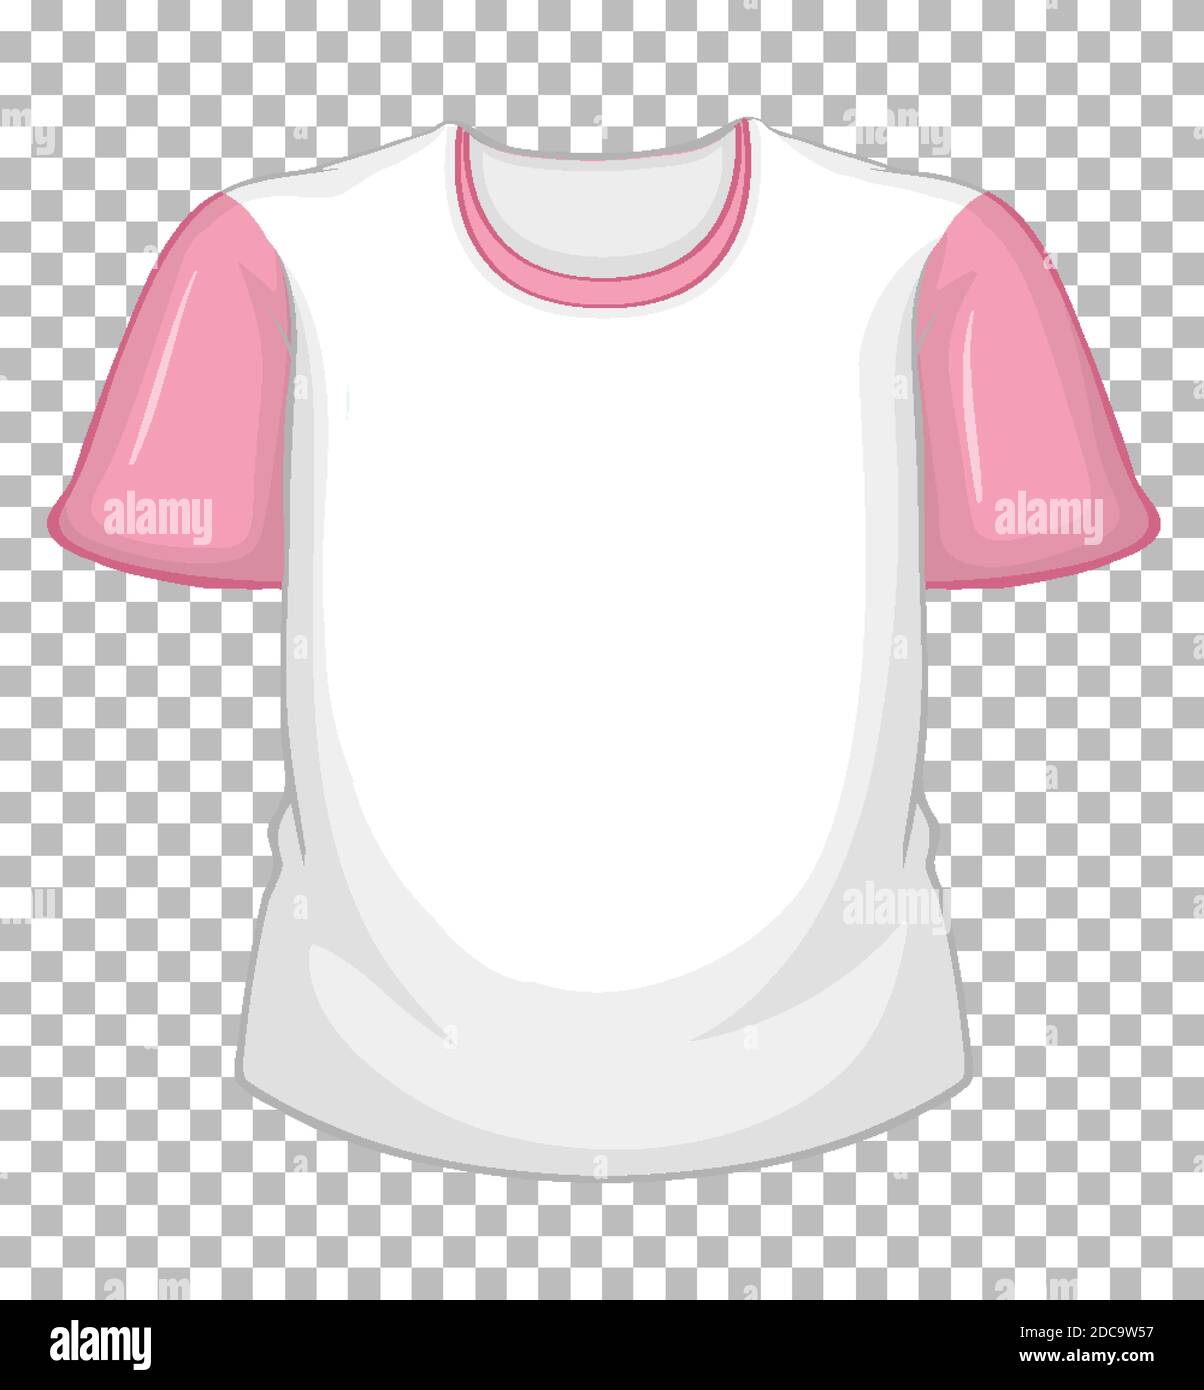 Weißes T-Shirt mit rosa kurzen Ärmeln auf transparenter Abbildung  Stock-Vektorgrafik - Alamy